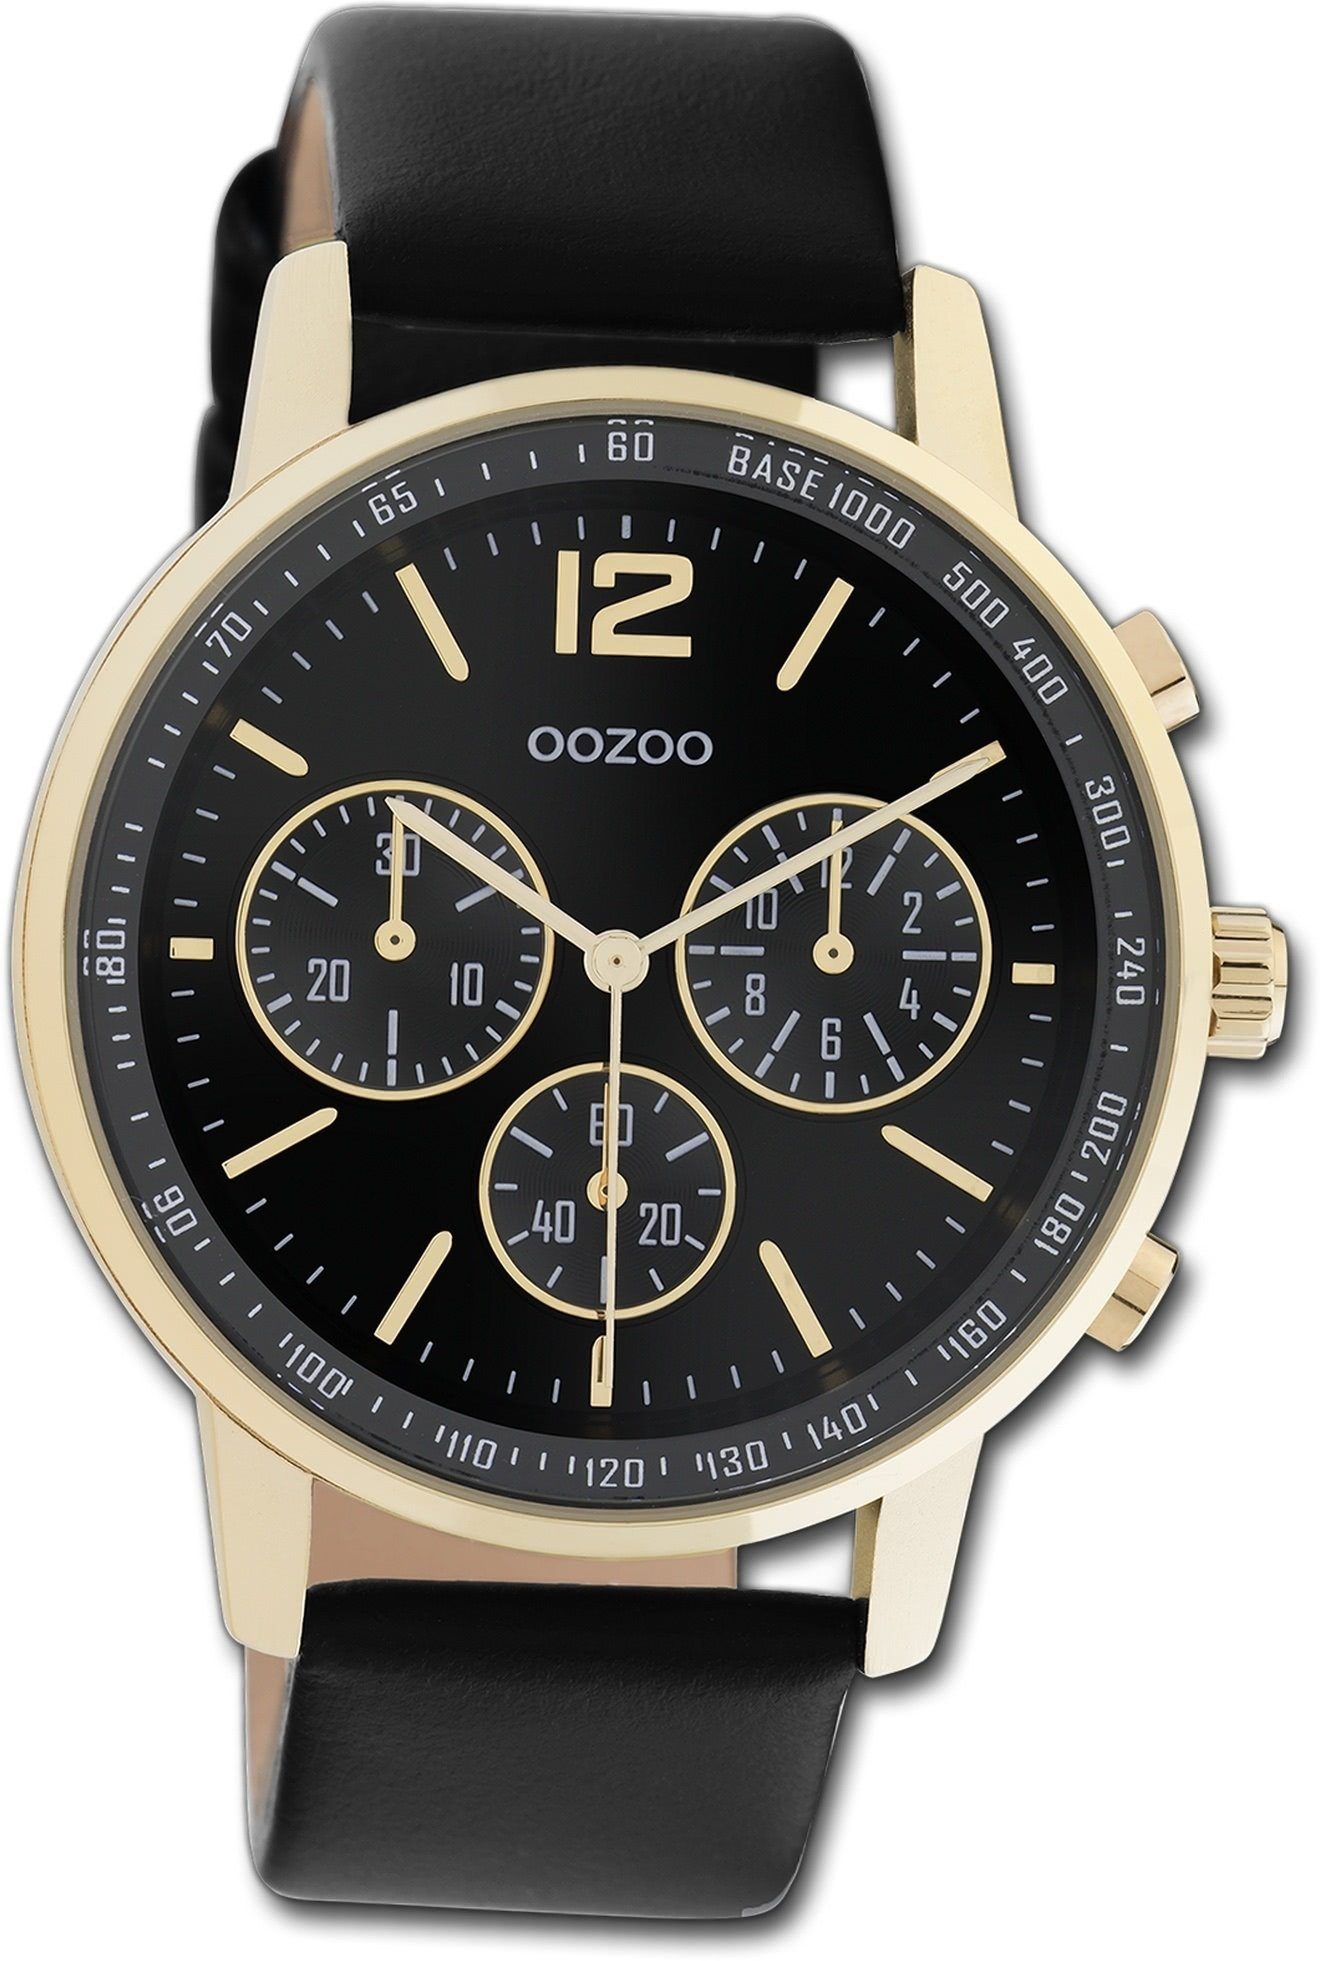 Damenuhr OOZOO Timepieces rundes Gehäuse, gold, Quarzuhr Damen (ca. Lederarmband schwarz, groß 42mm) Oozoo Armbanduhr